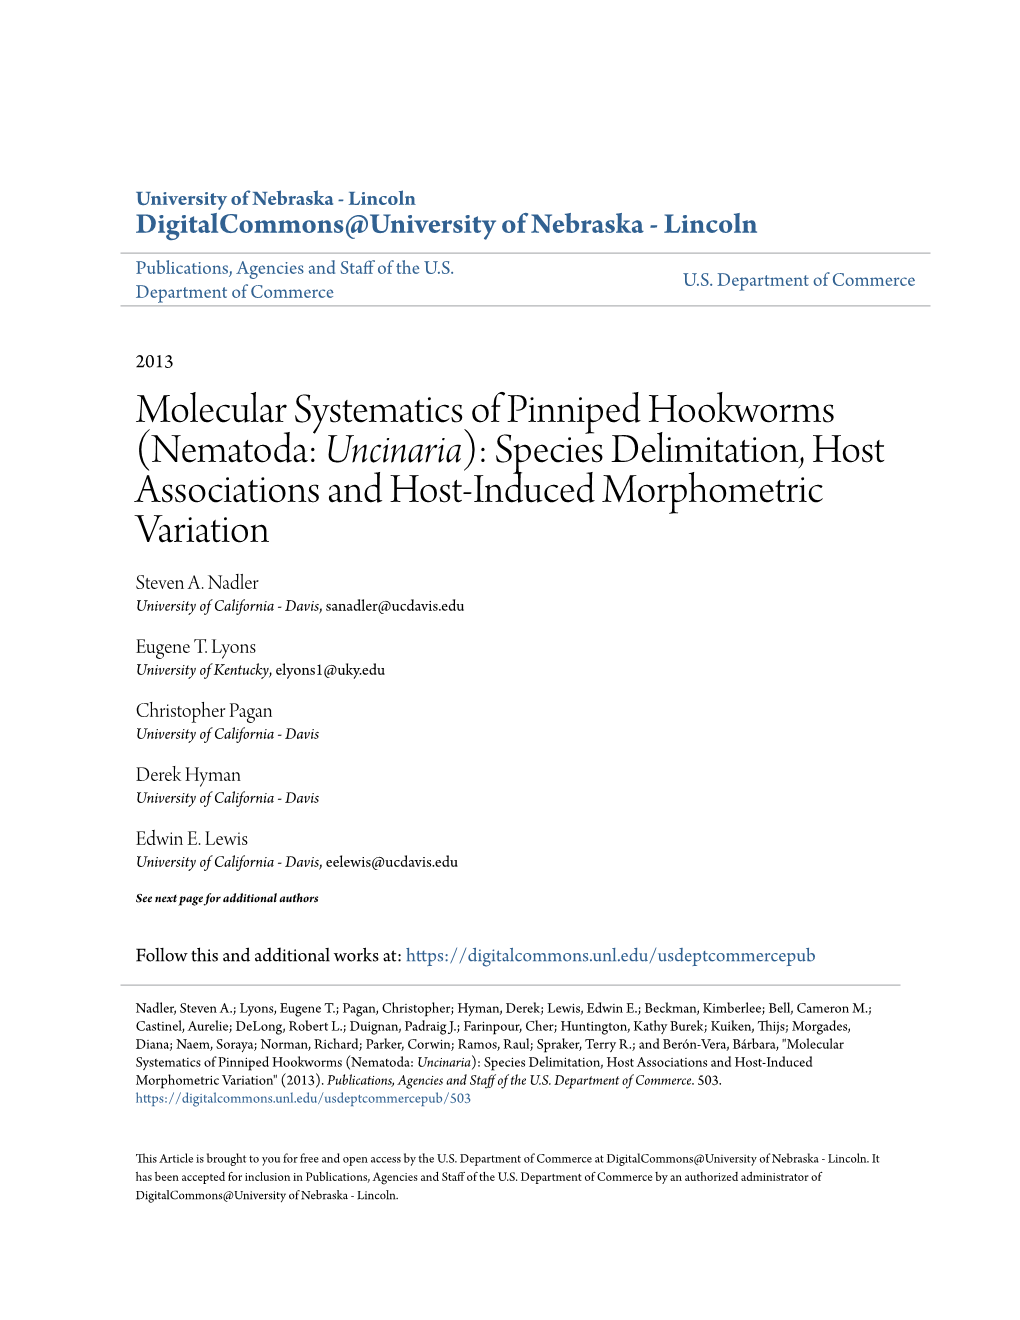 Molecular Systematics of Pinniped Hookworms (Nematoda: &lt;I